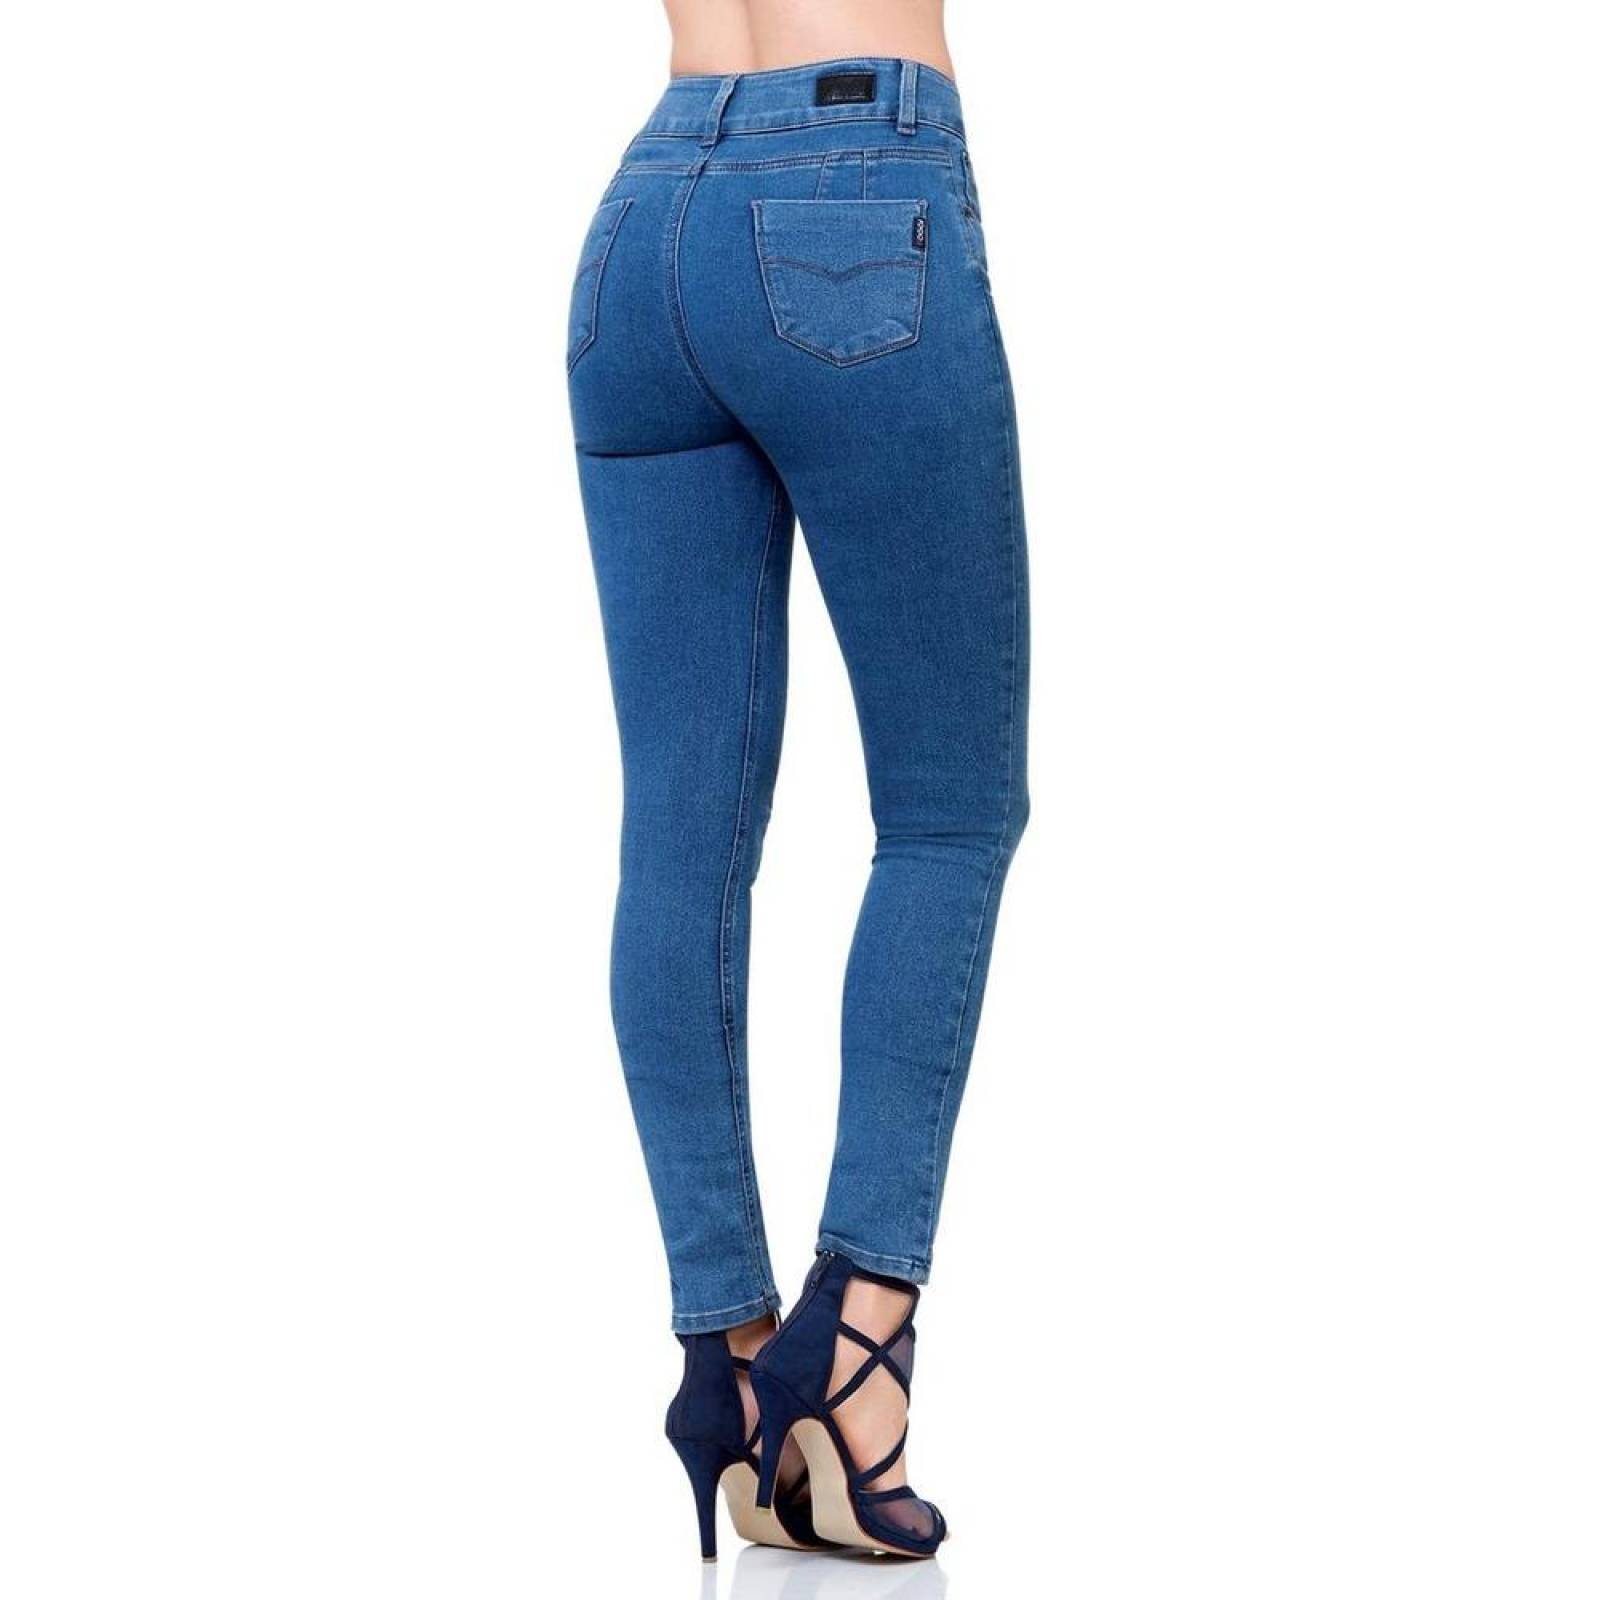 Jeans Básico Mujer Oggi Satin 59102092 Mezclilla Stretch 